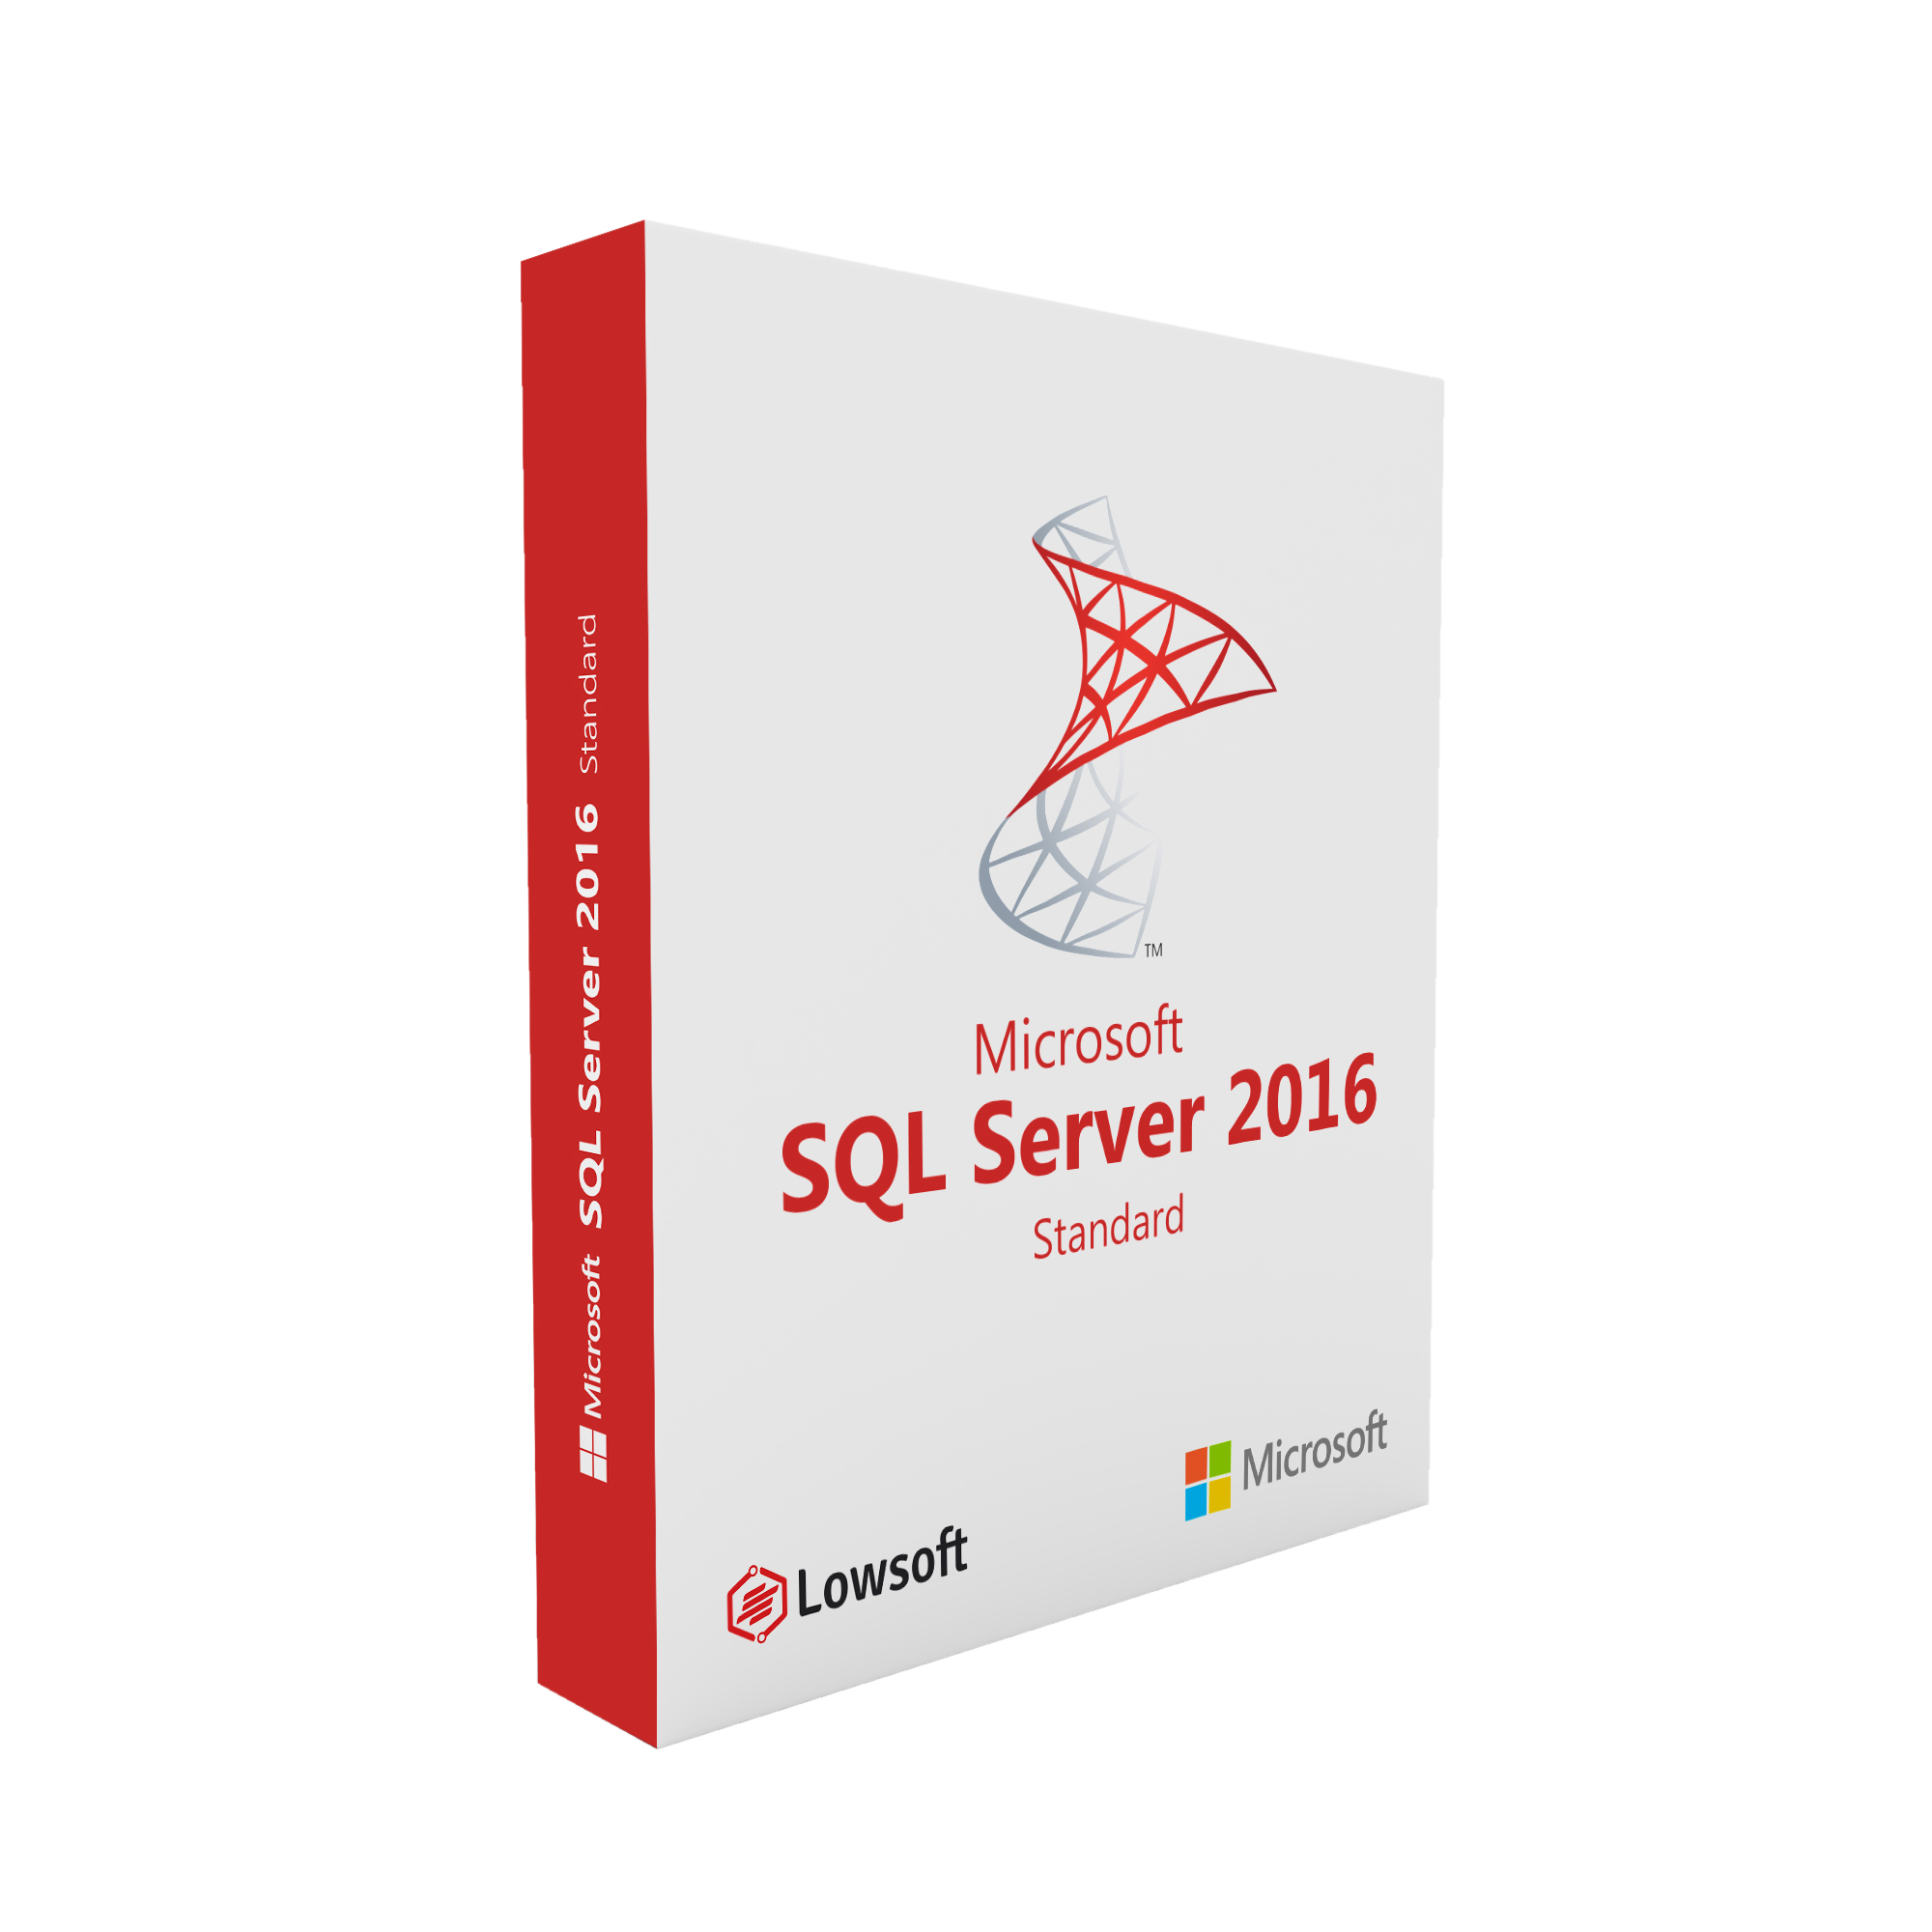 SQL Server 2016 Standard